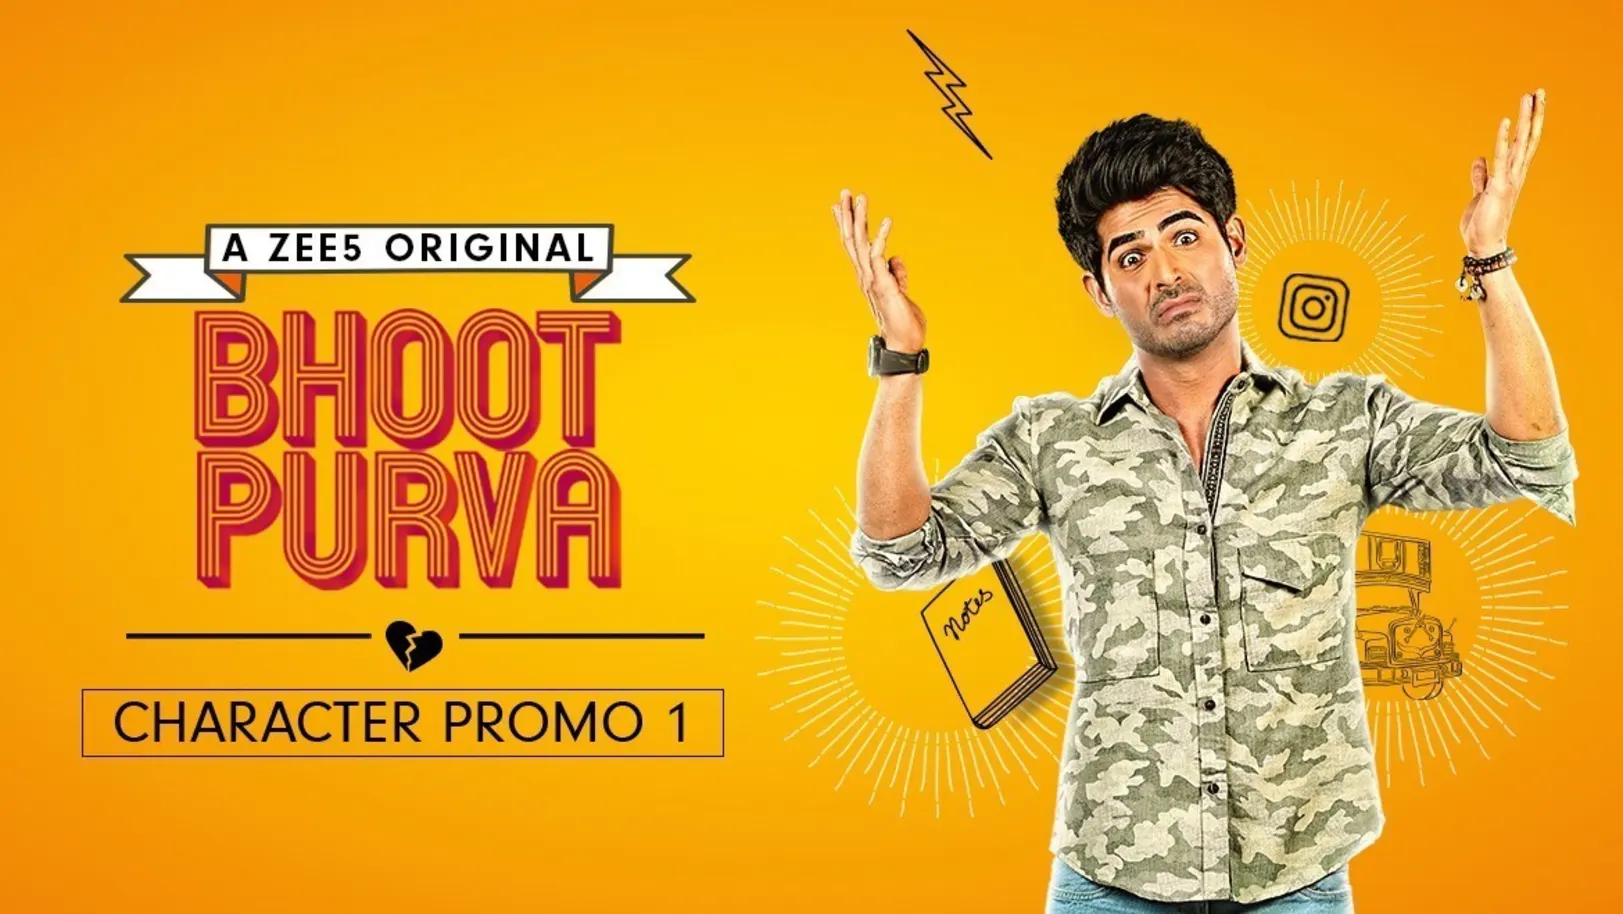 Purva, the Bechara Boy | Bhoot Purva | Promo